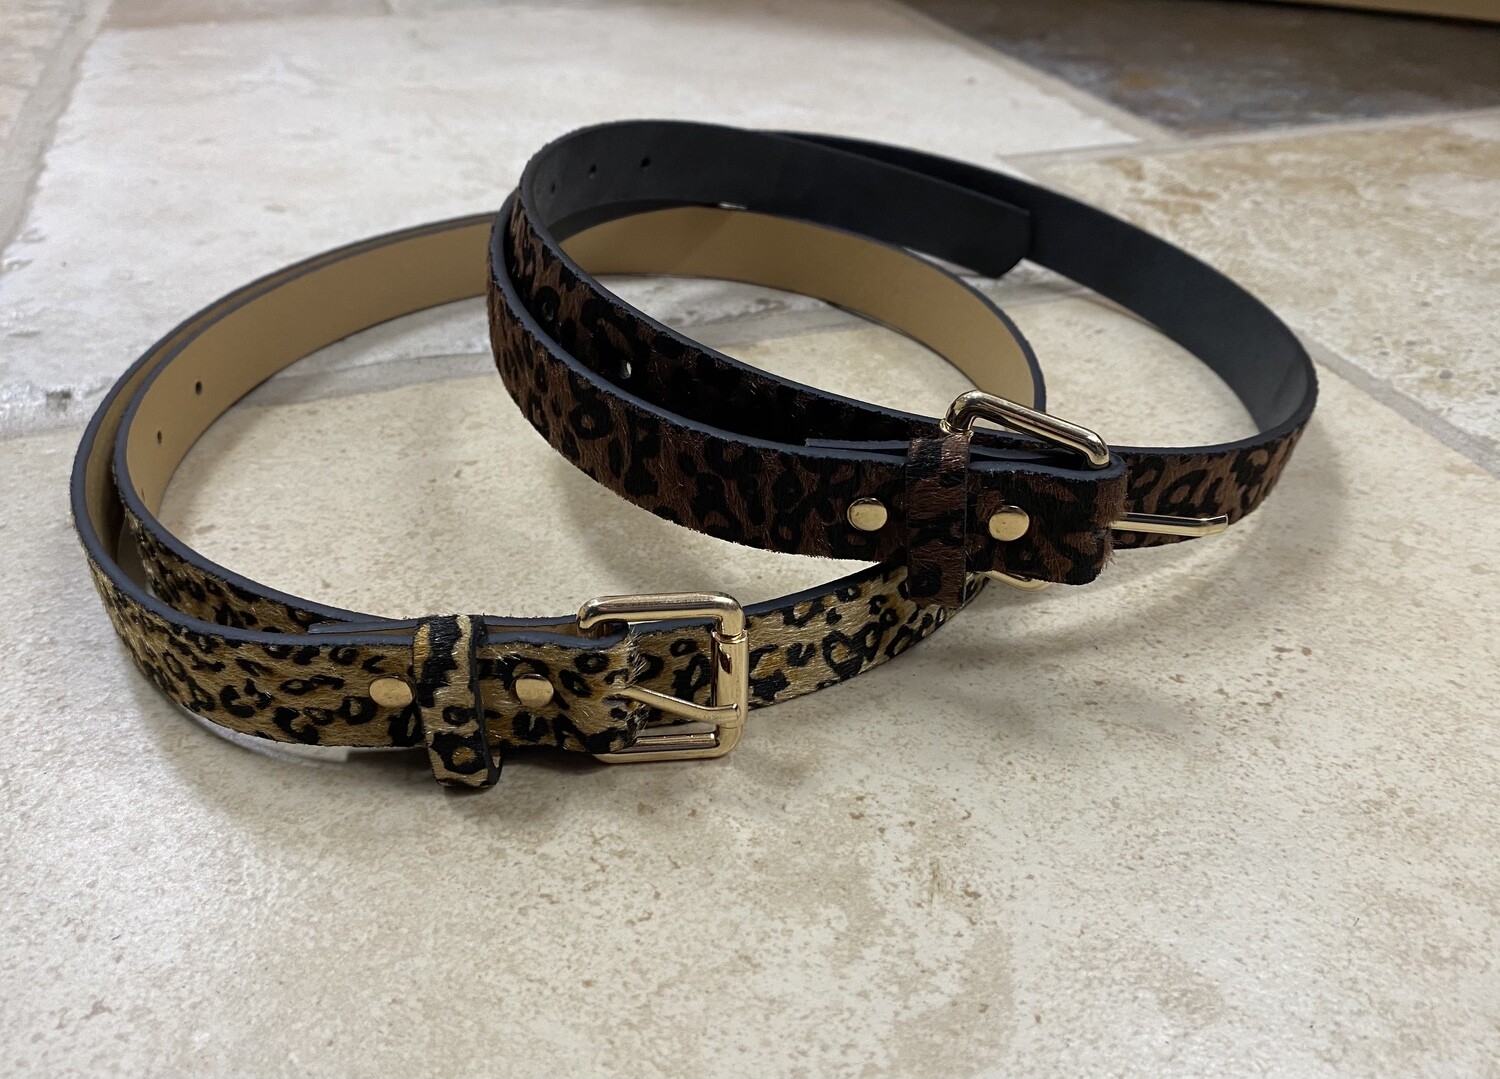 Leopard Leather Belt